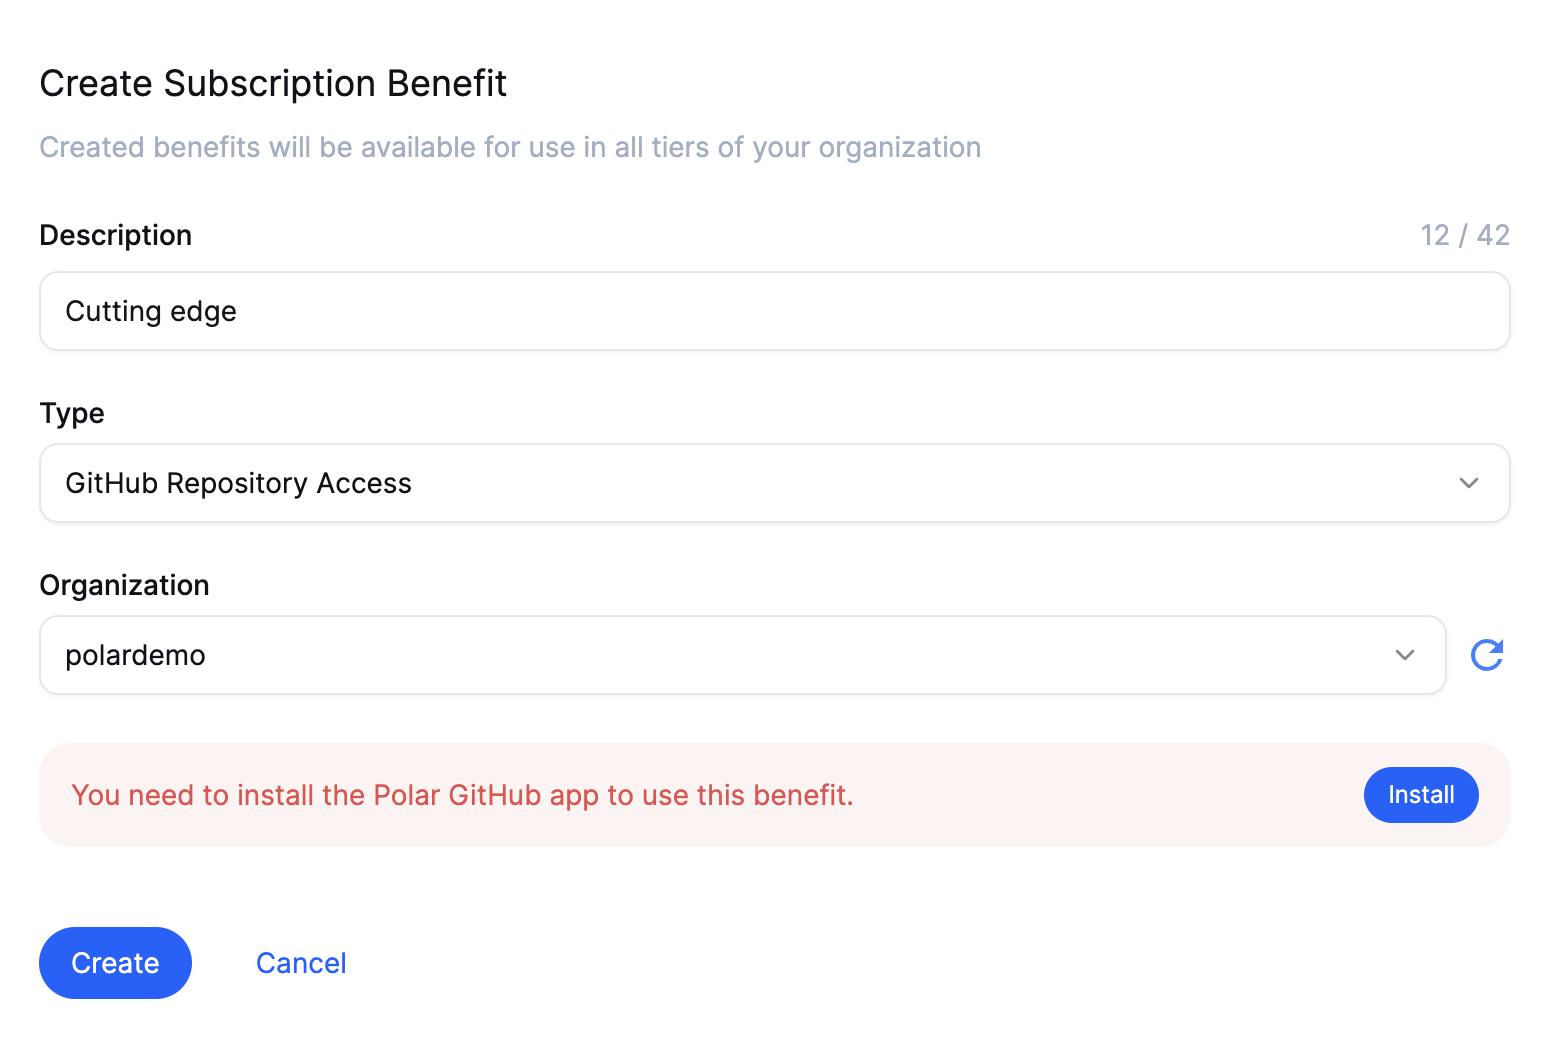 Create benefit - Install GitHub App